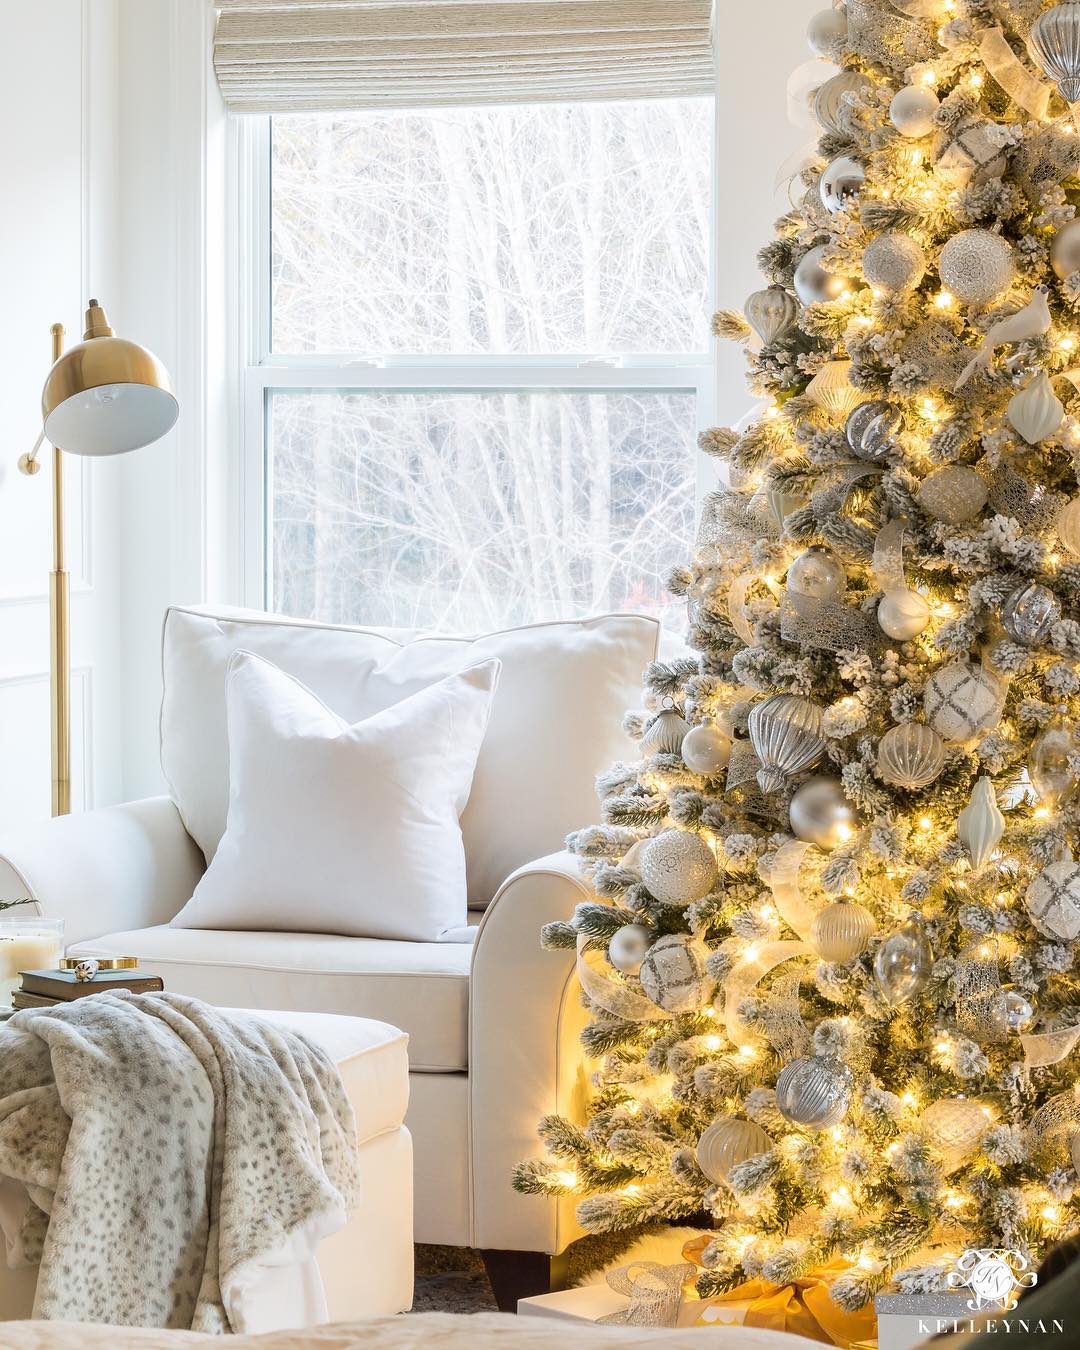 Top 12 beautiful Christmas tree decorations – Gazzed